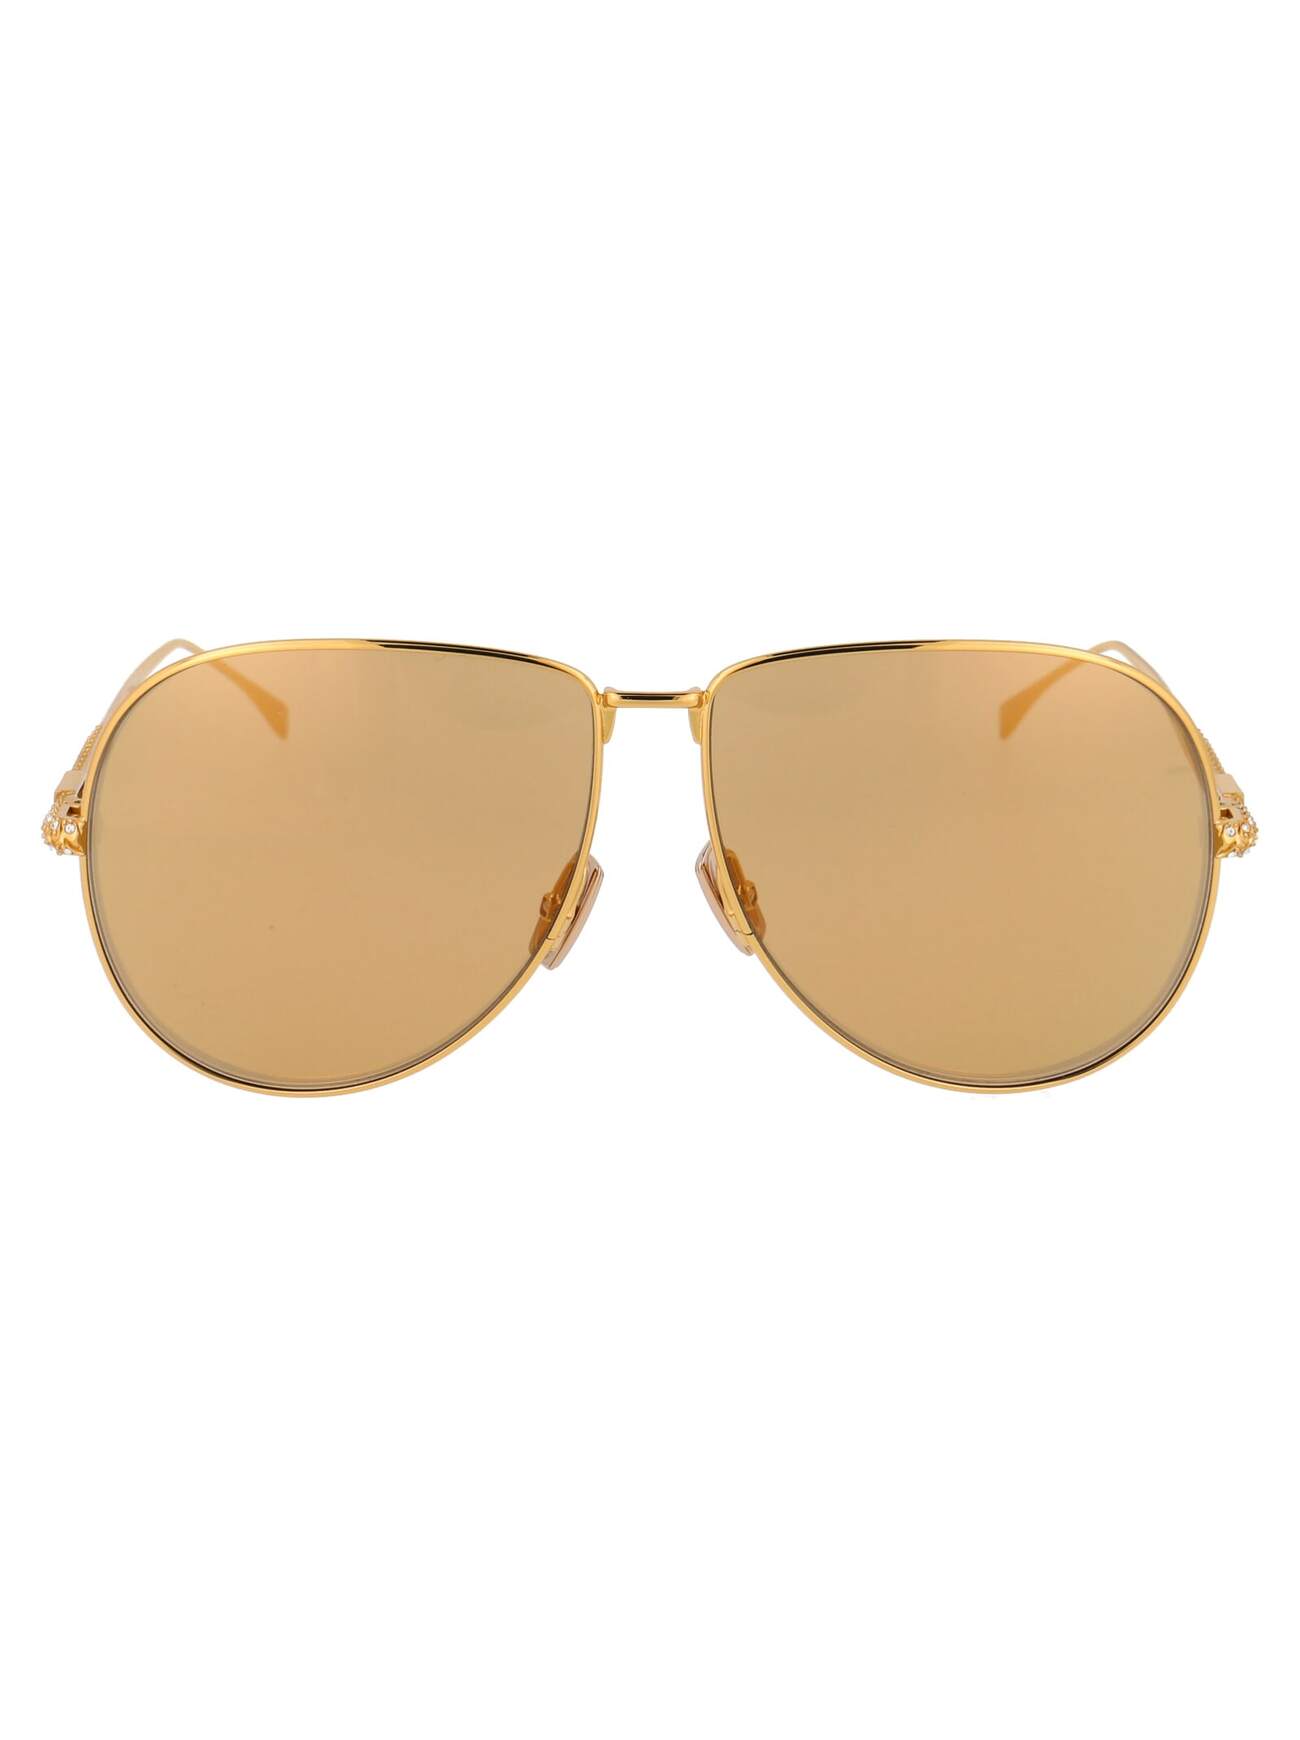 Fendi Eyewear Ff 0437/s Sunglasses in gold / yellow